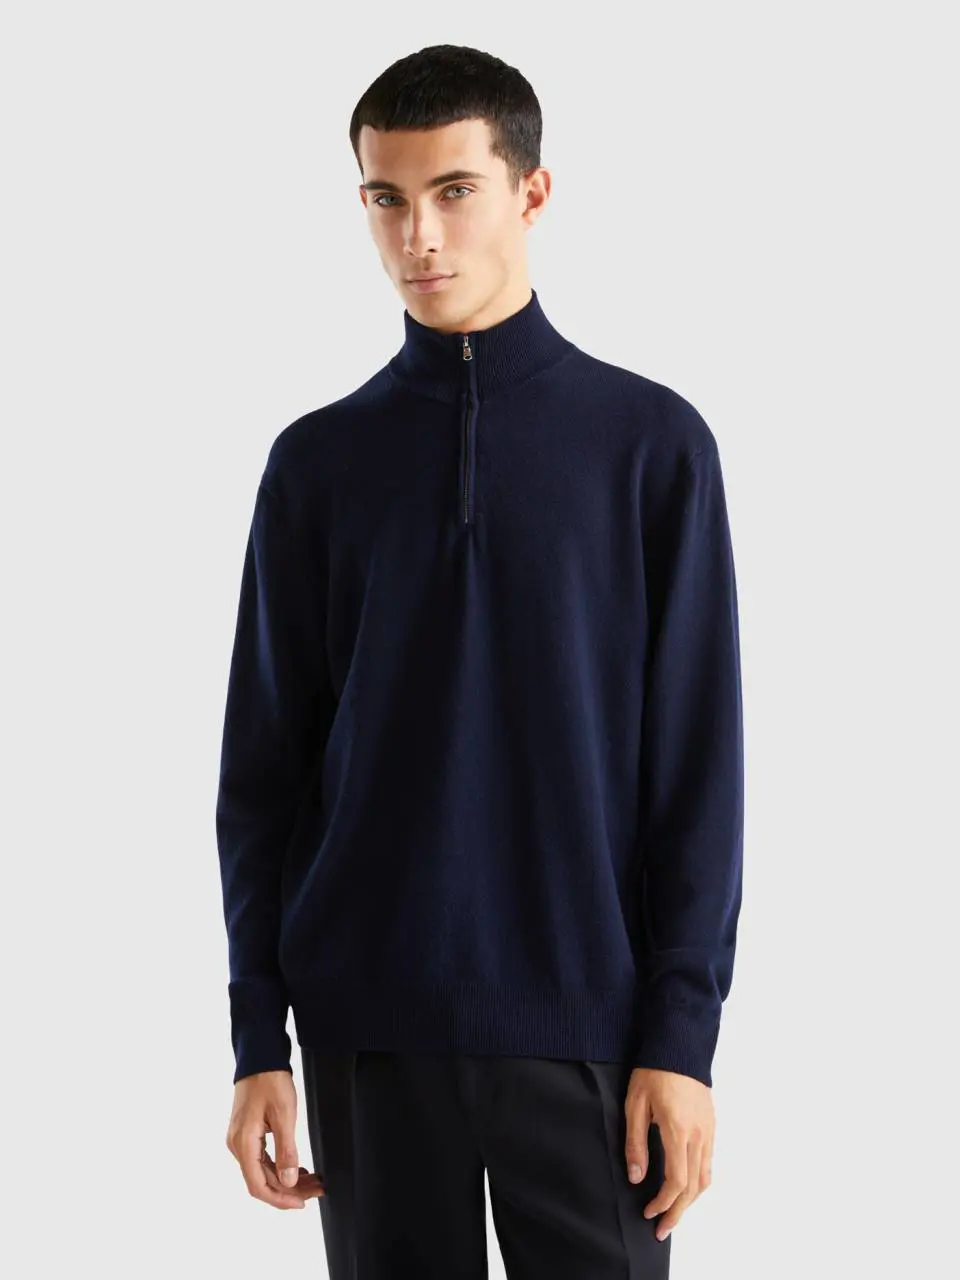 Benetton dark blue zip-up sweater in 100% merino wool. 1